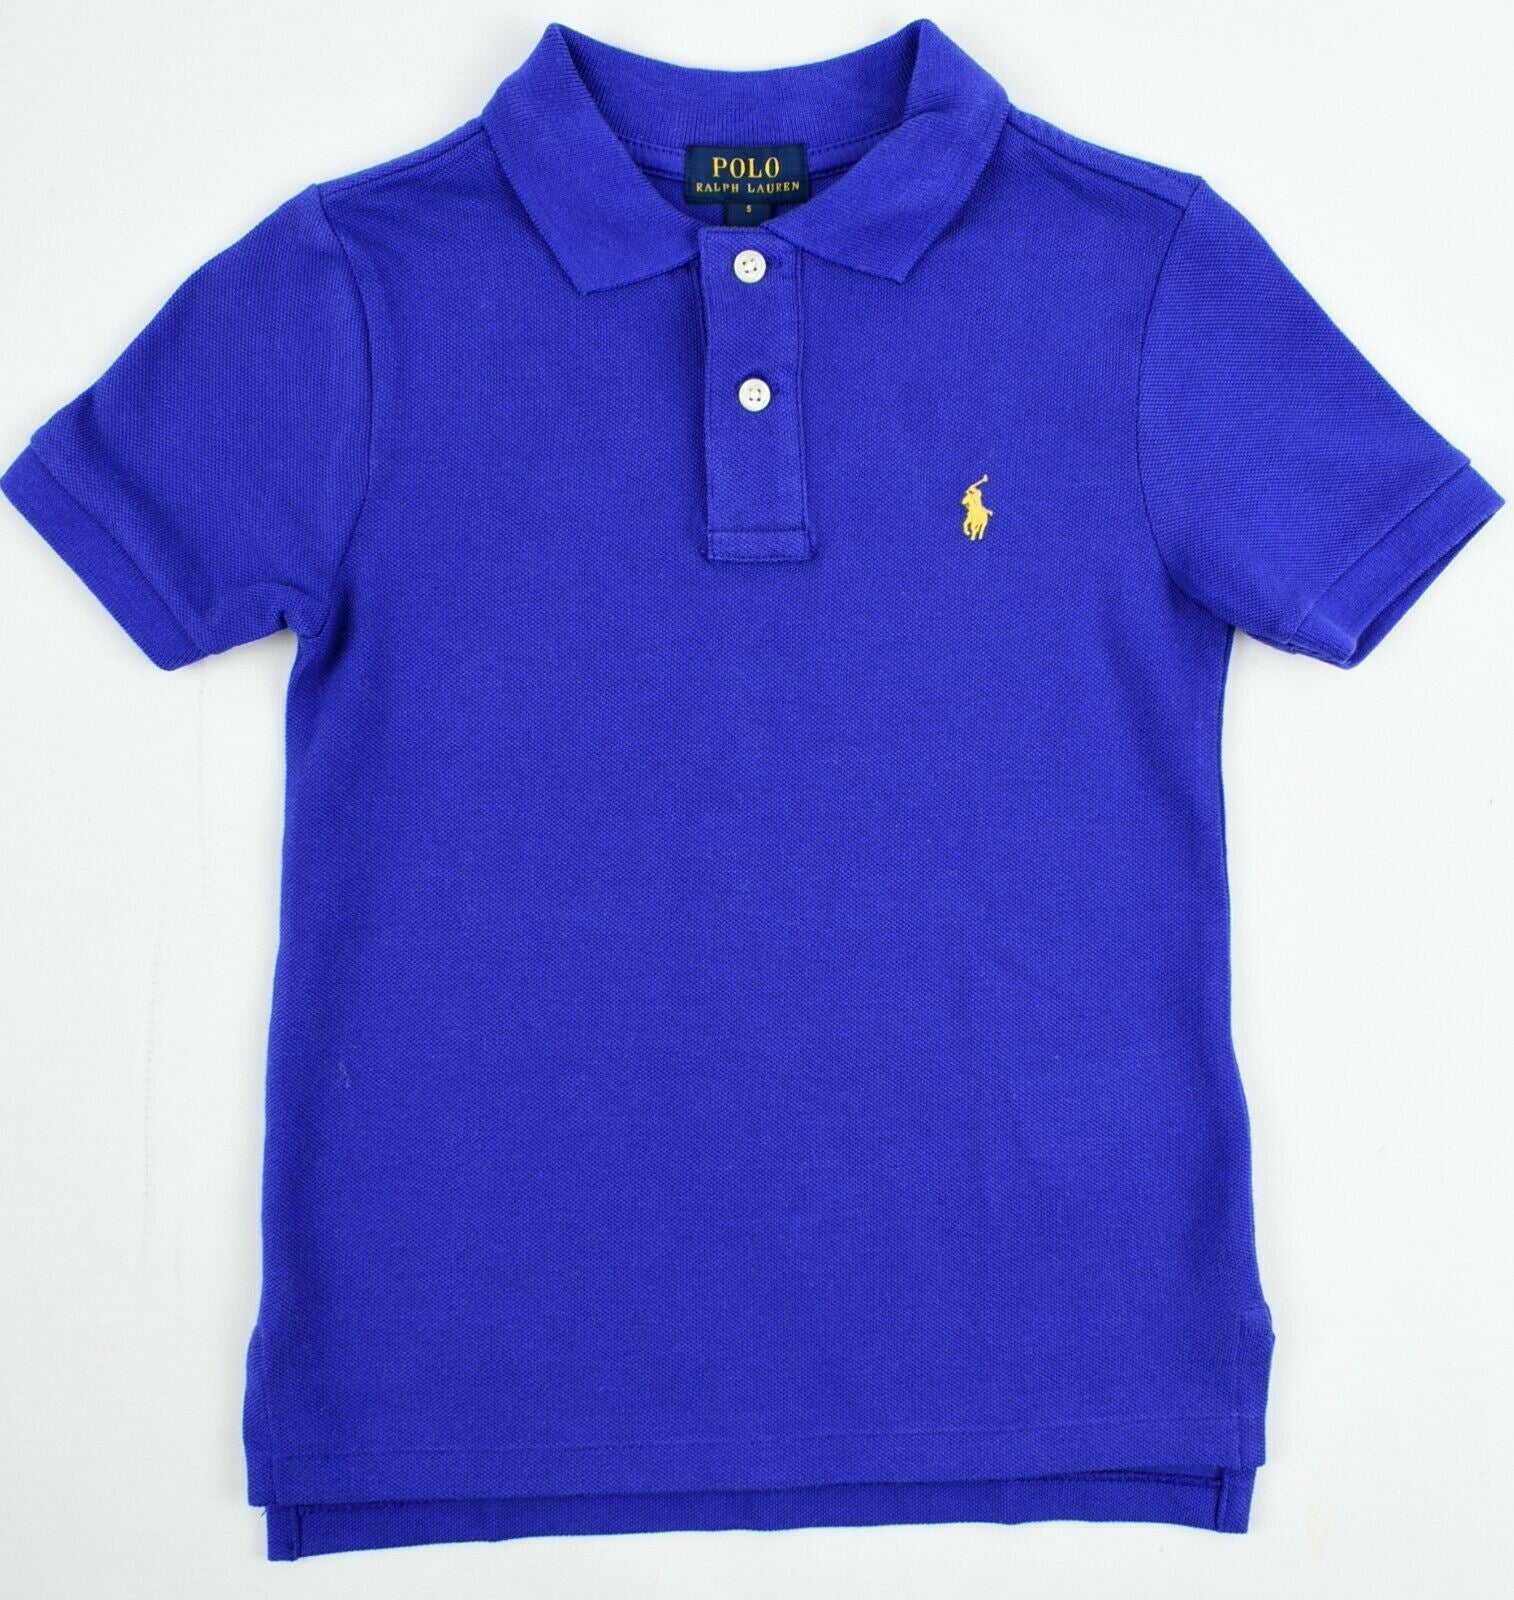 POLO RALPH LAUREN Boys' Kids' Polo Shirt, Cobalt Blue, size 5 years